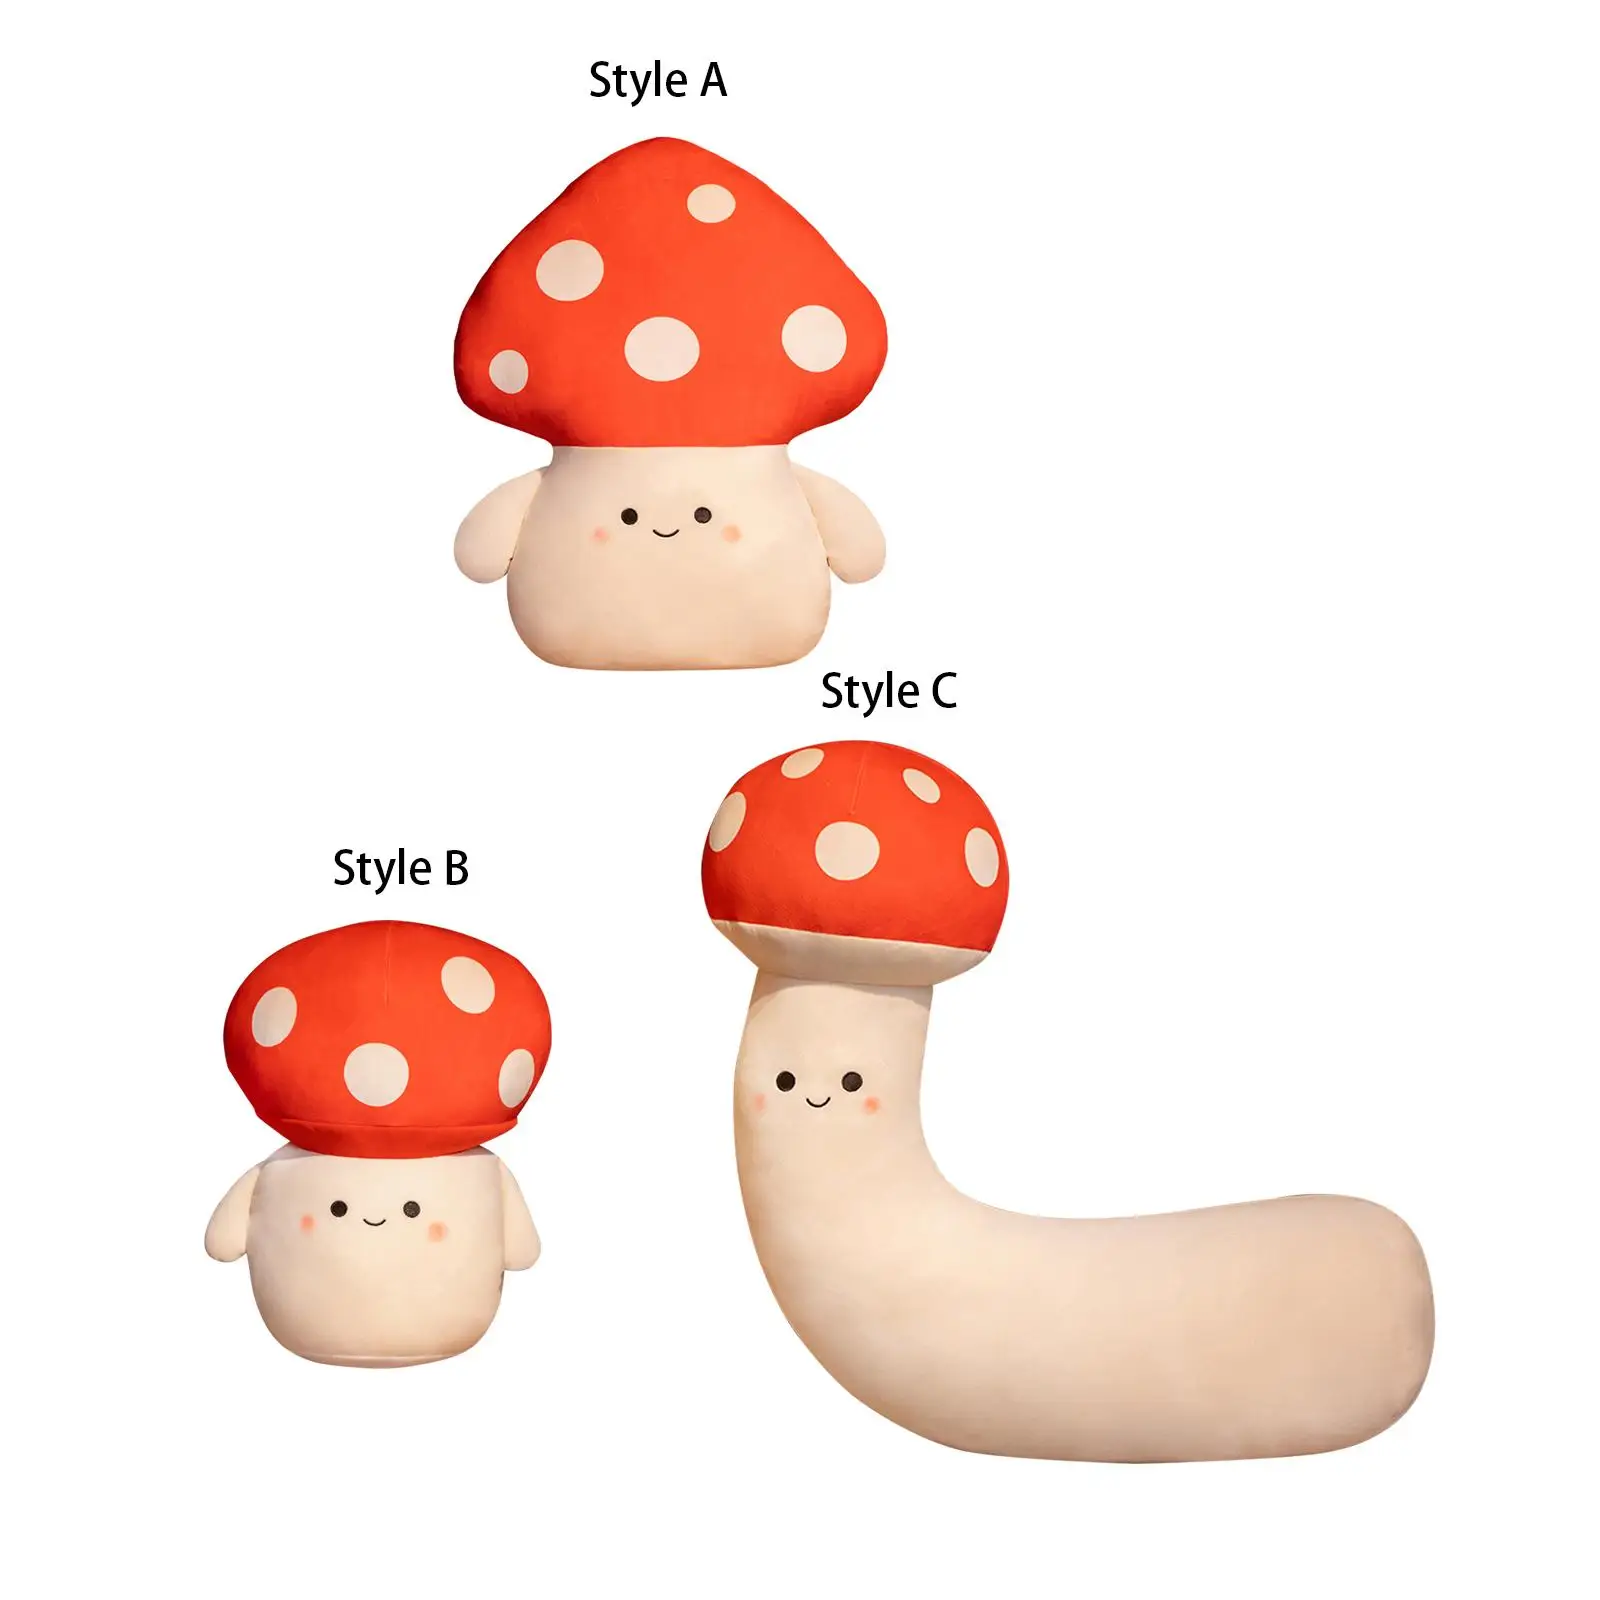 Cute Plush Mushroom Toy Ornament Stuffed Mushroom Toy for Bedroom Decor Housewarming Gift